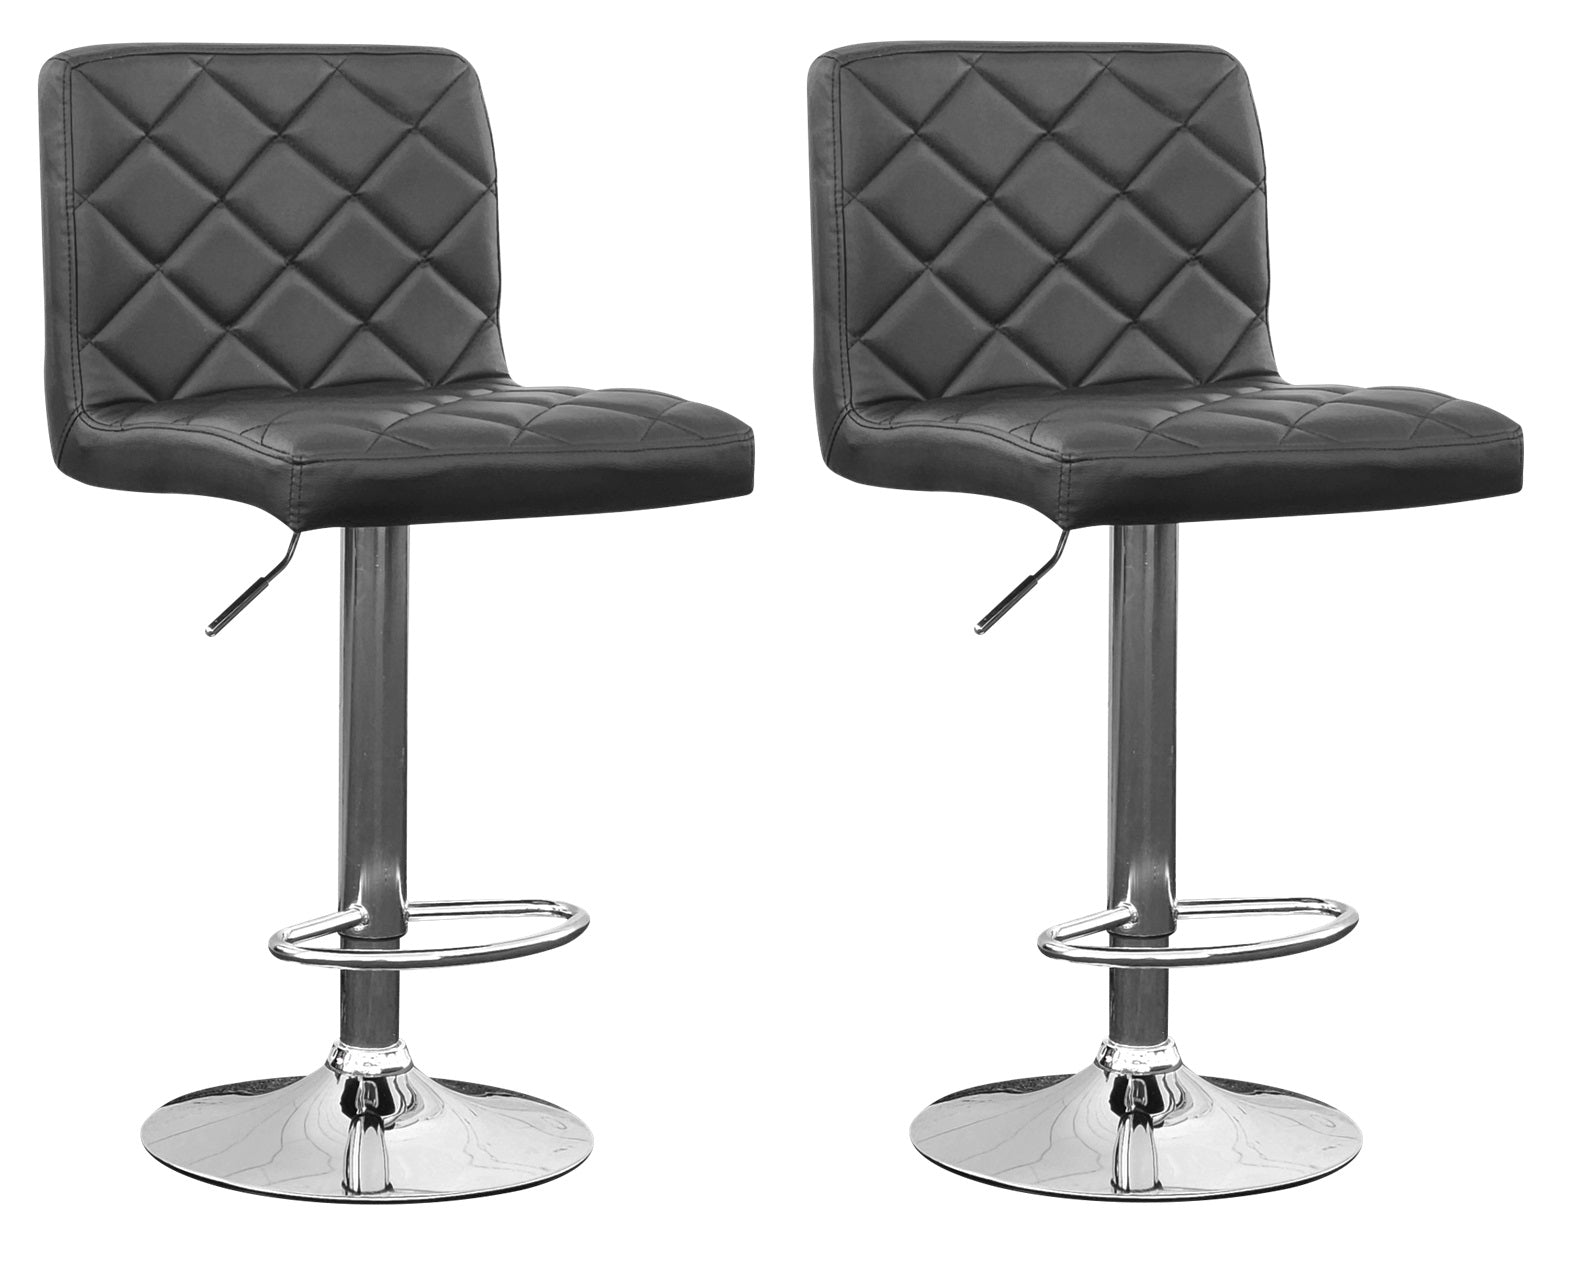 Normandy Bar stool - 2PK - Black / Chrome.